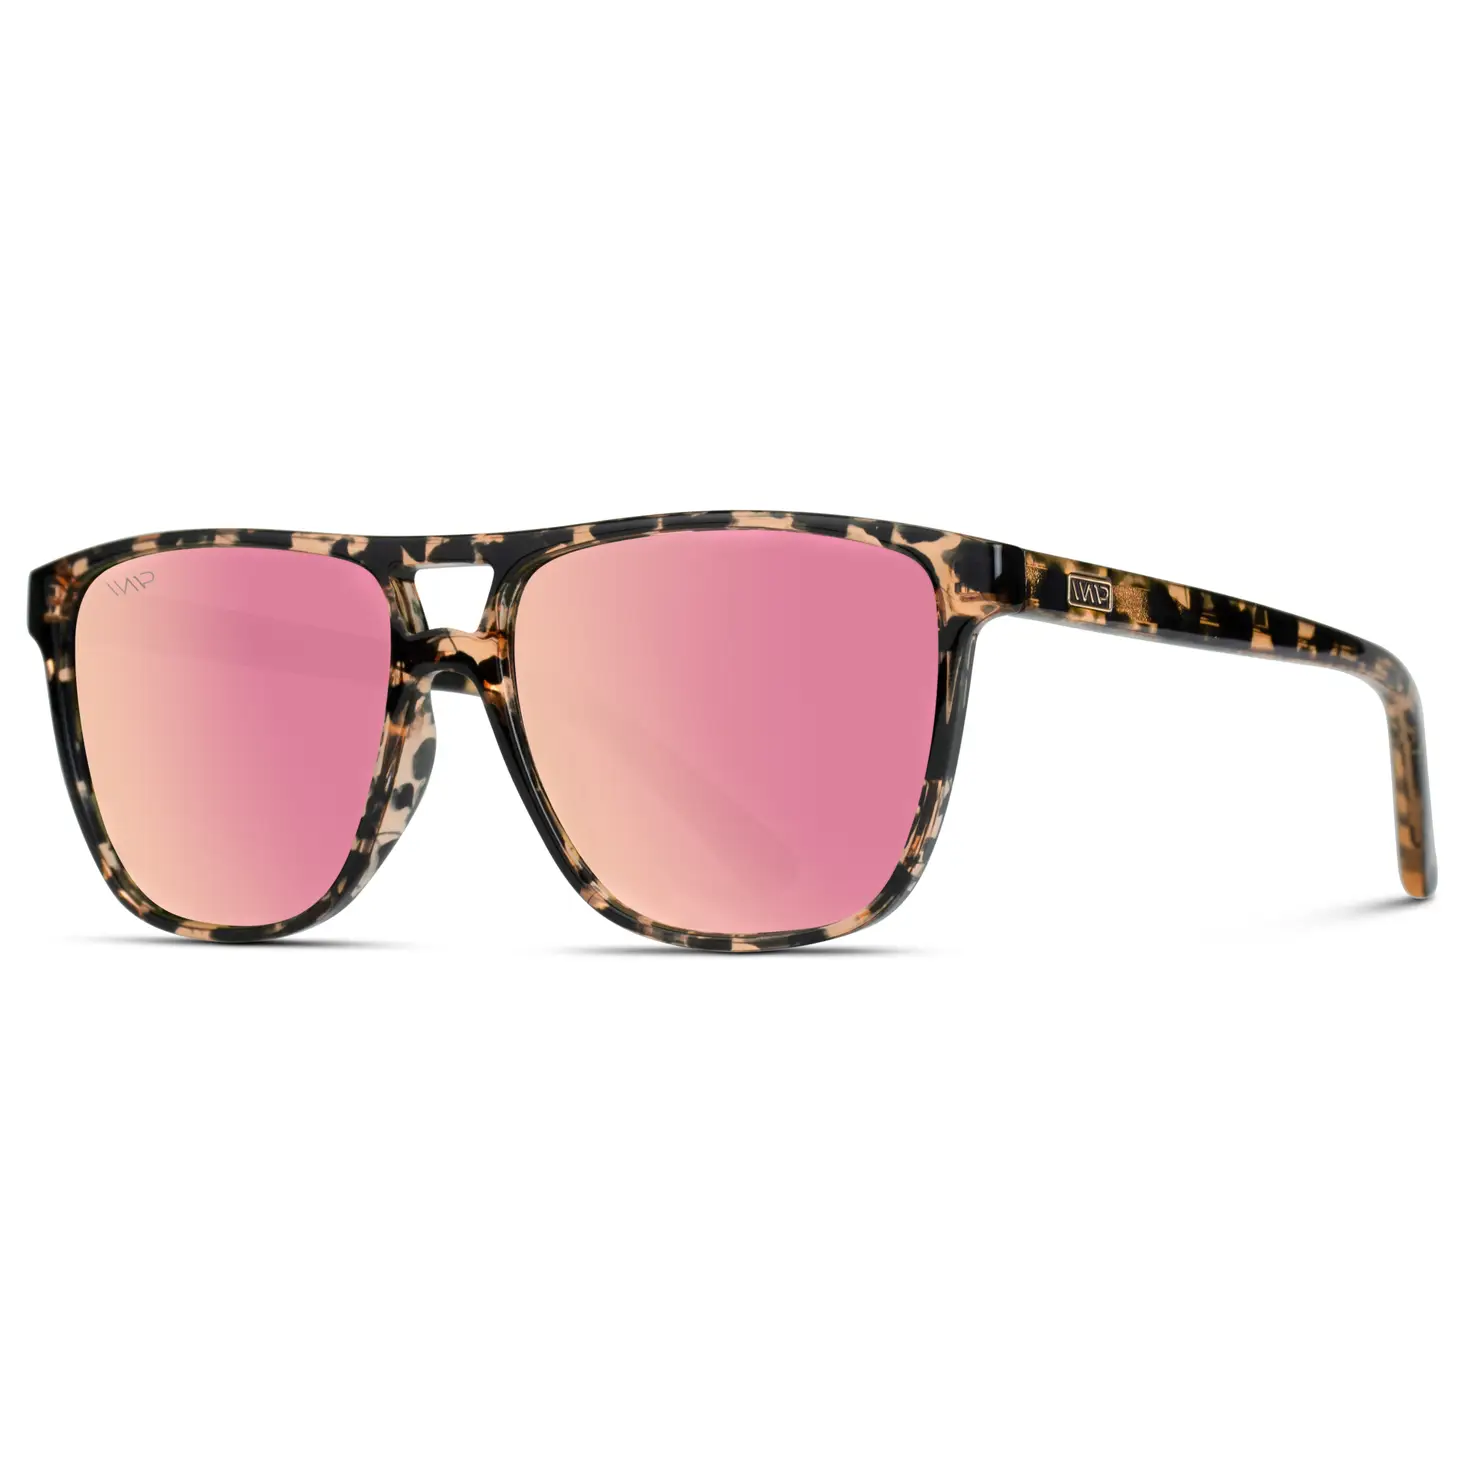 Phoenix Sunglasses in Peach Tortoise/Mirror Pink